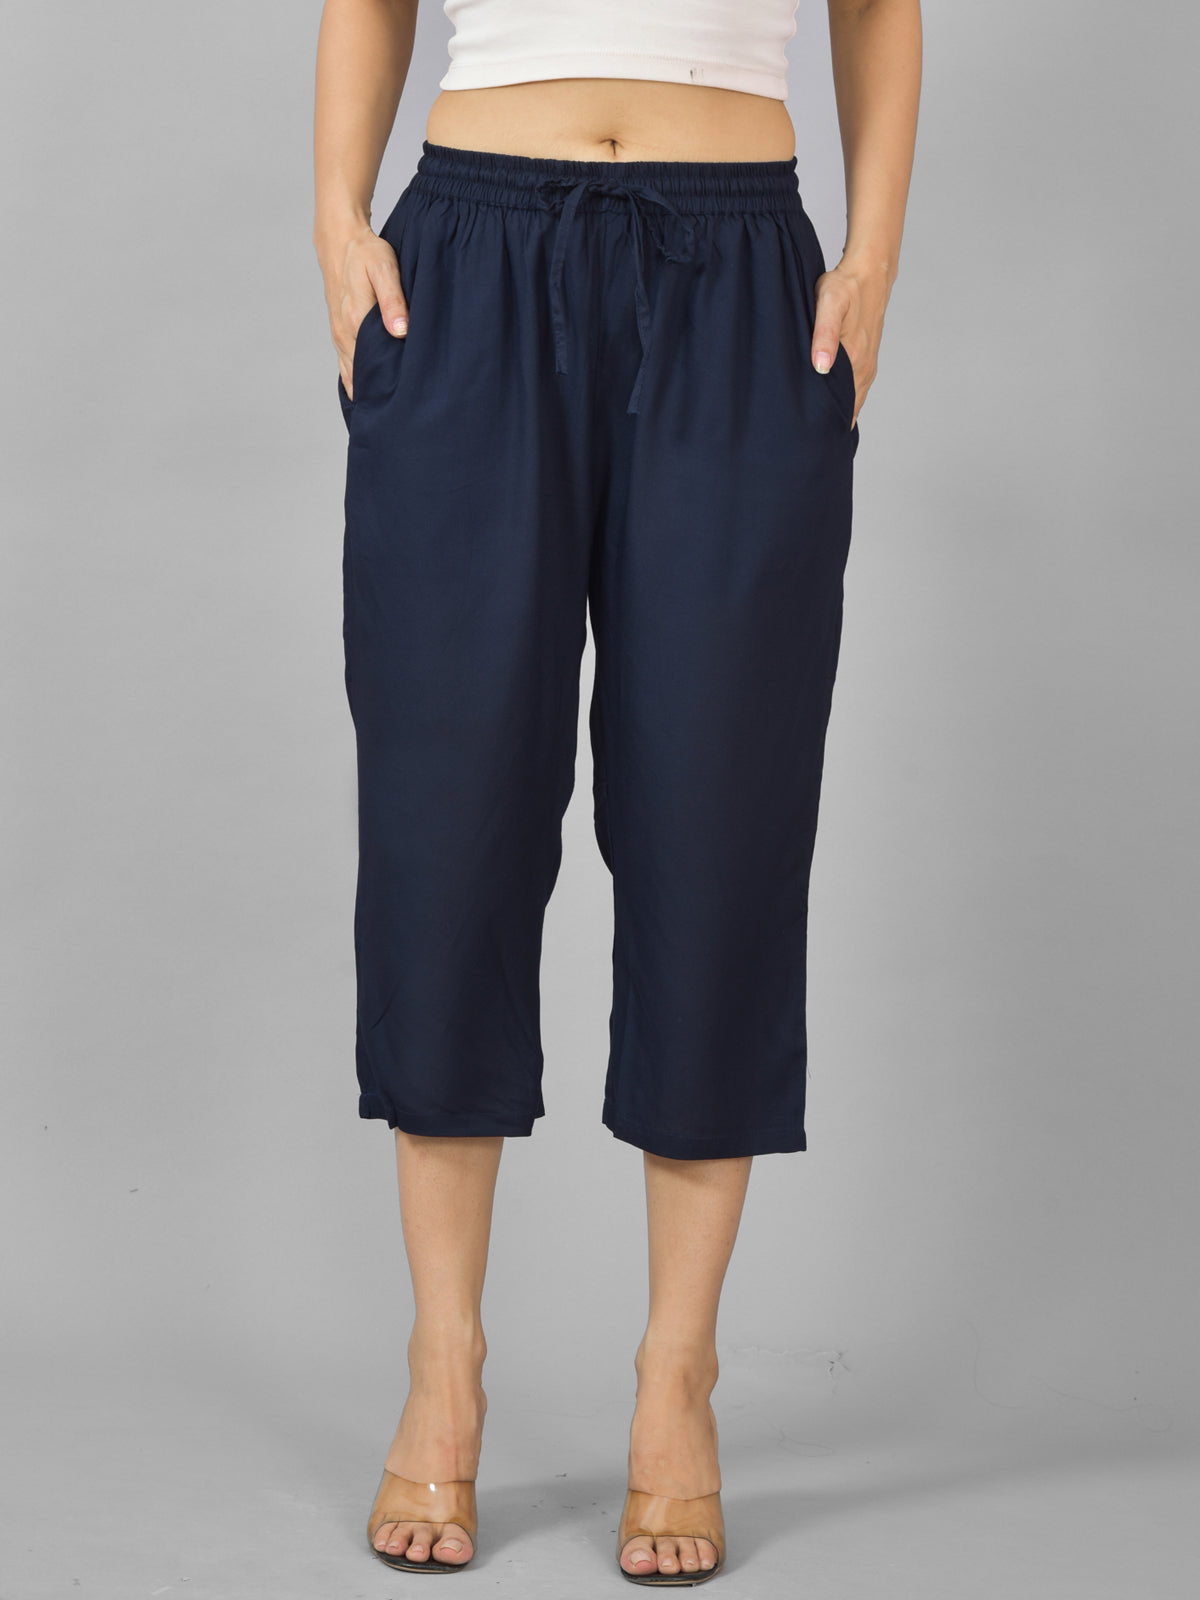 Buy QuaClo Black Navy Blue Women Rayon Pants-S at